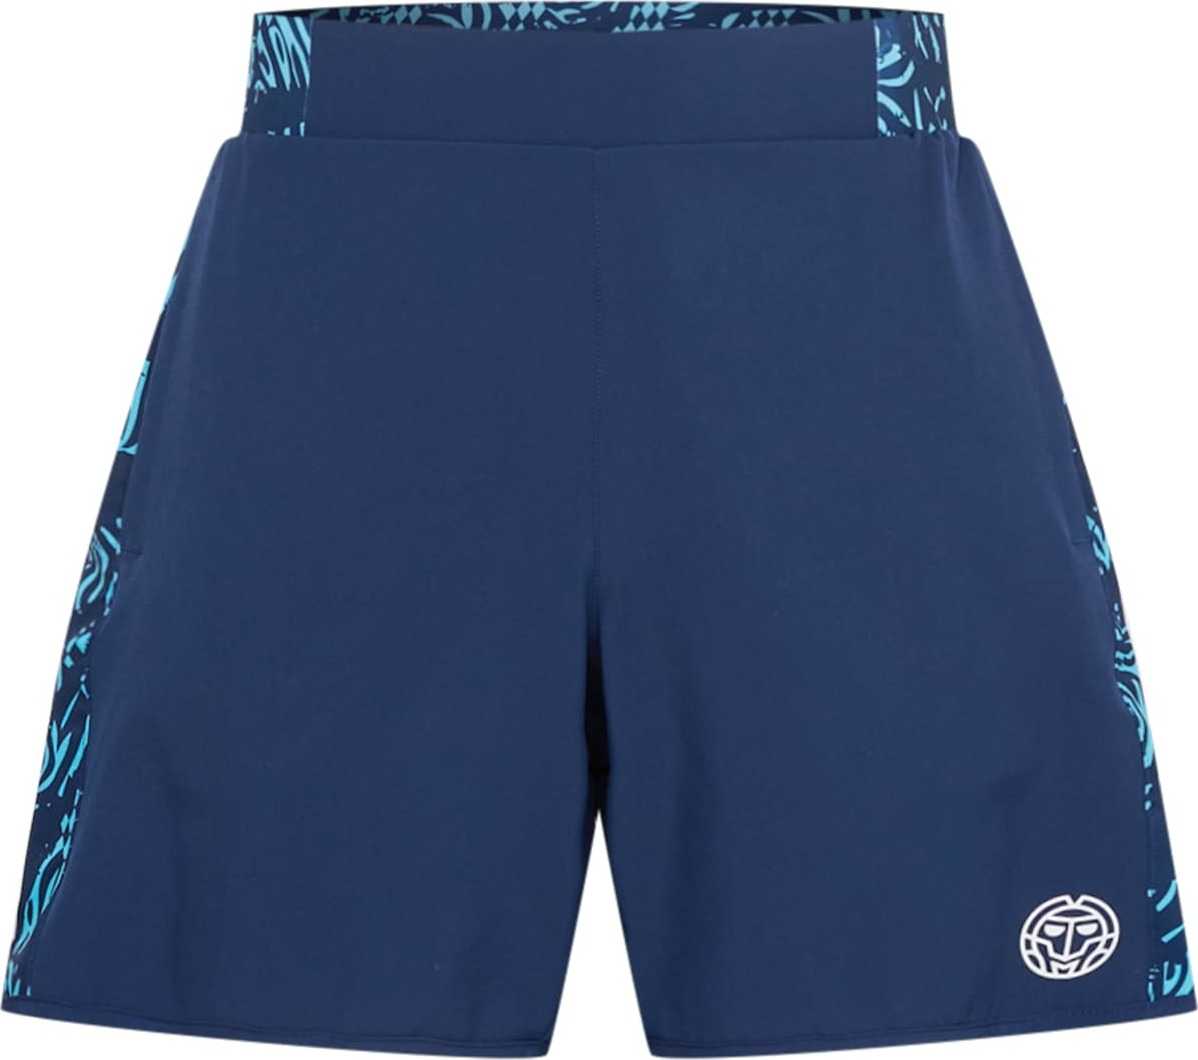 BIDI BADU Sportovní kalhoty 'Tulu 7' marine modrá / azurová modrá / bílá